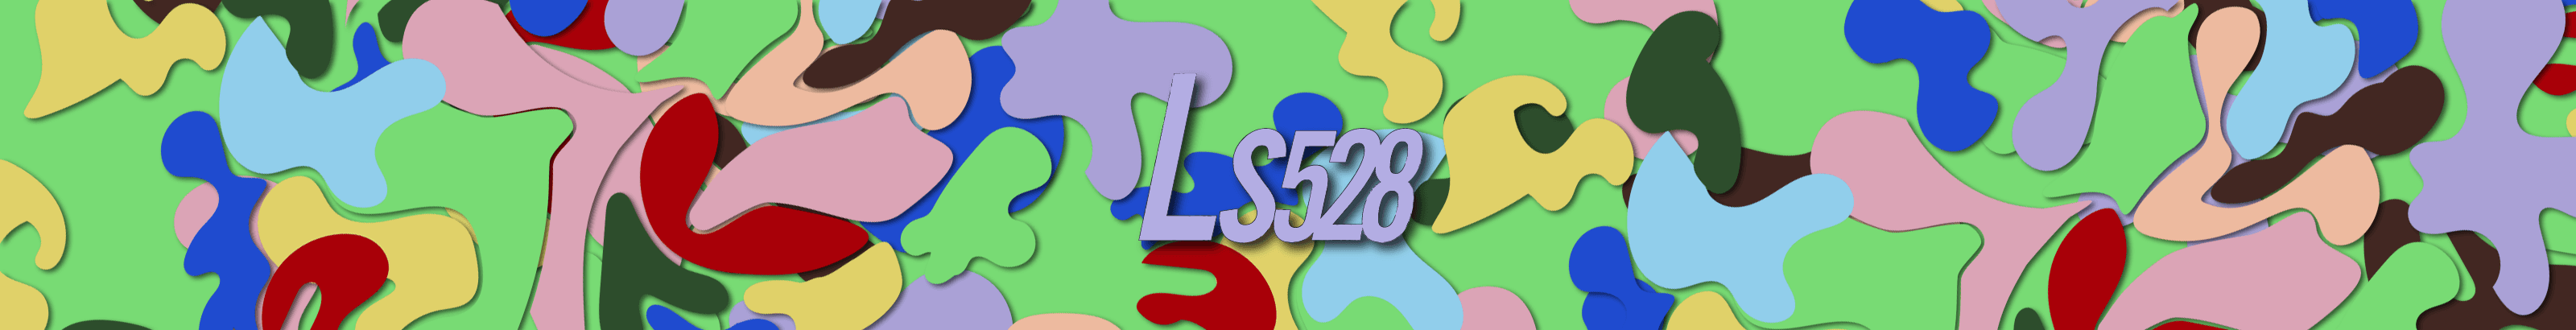 Ls528 横幅